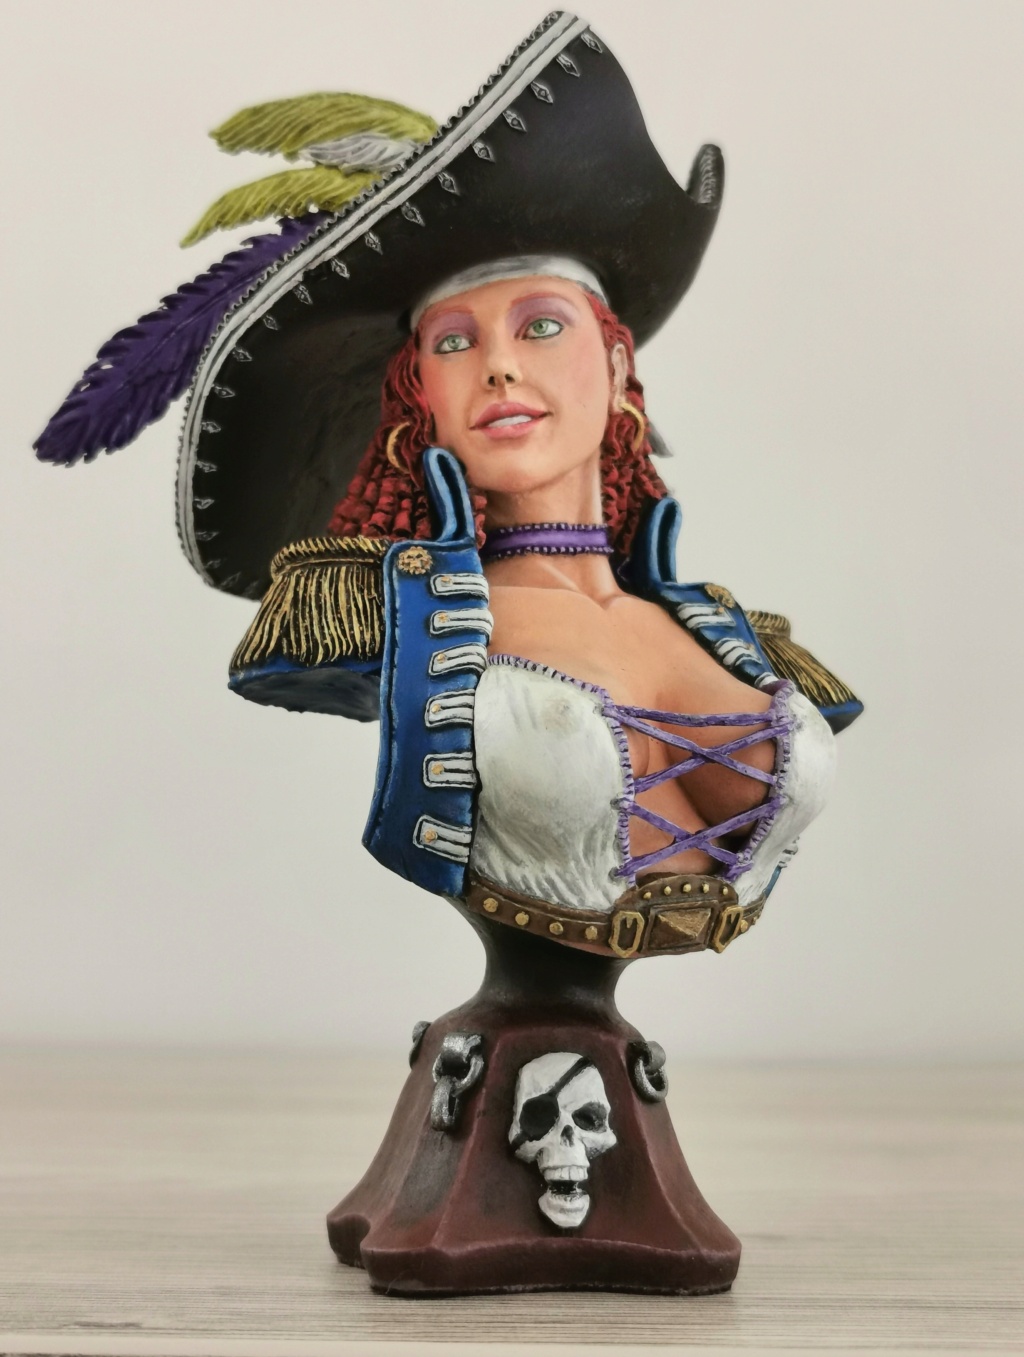 Femme de Pirate Img_2086